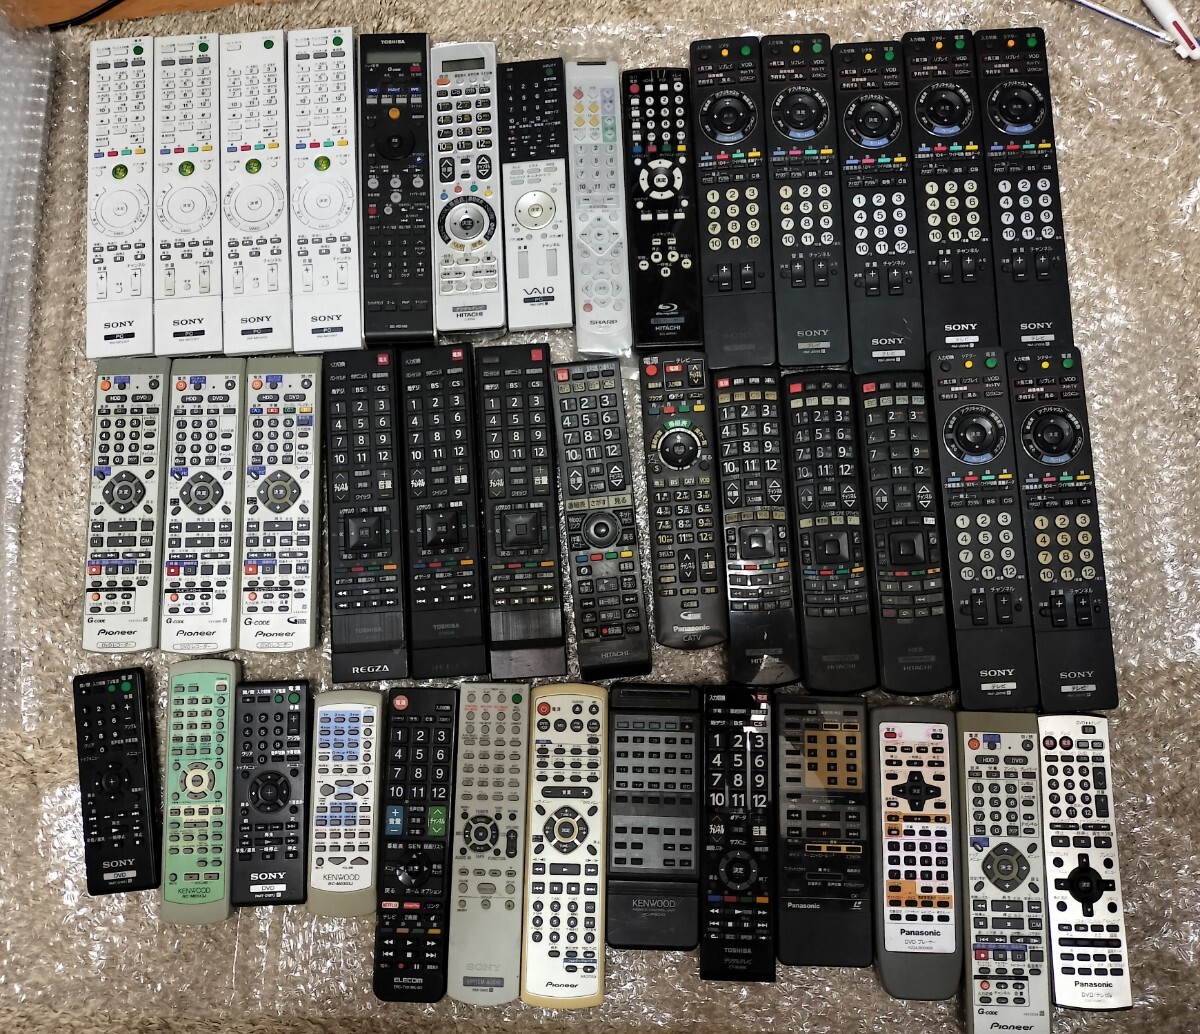  remote control 137ps.@ large amount set sale SHARP Panasonic Toshiba AQUOS SONY etc. Junk 